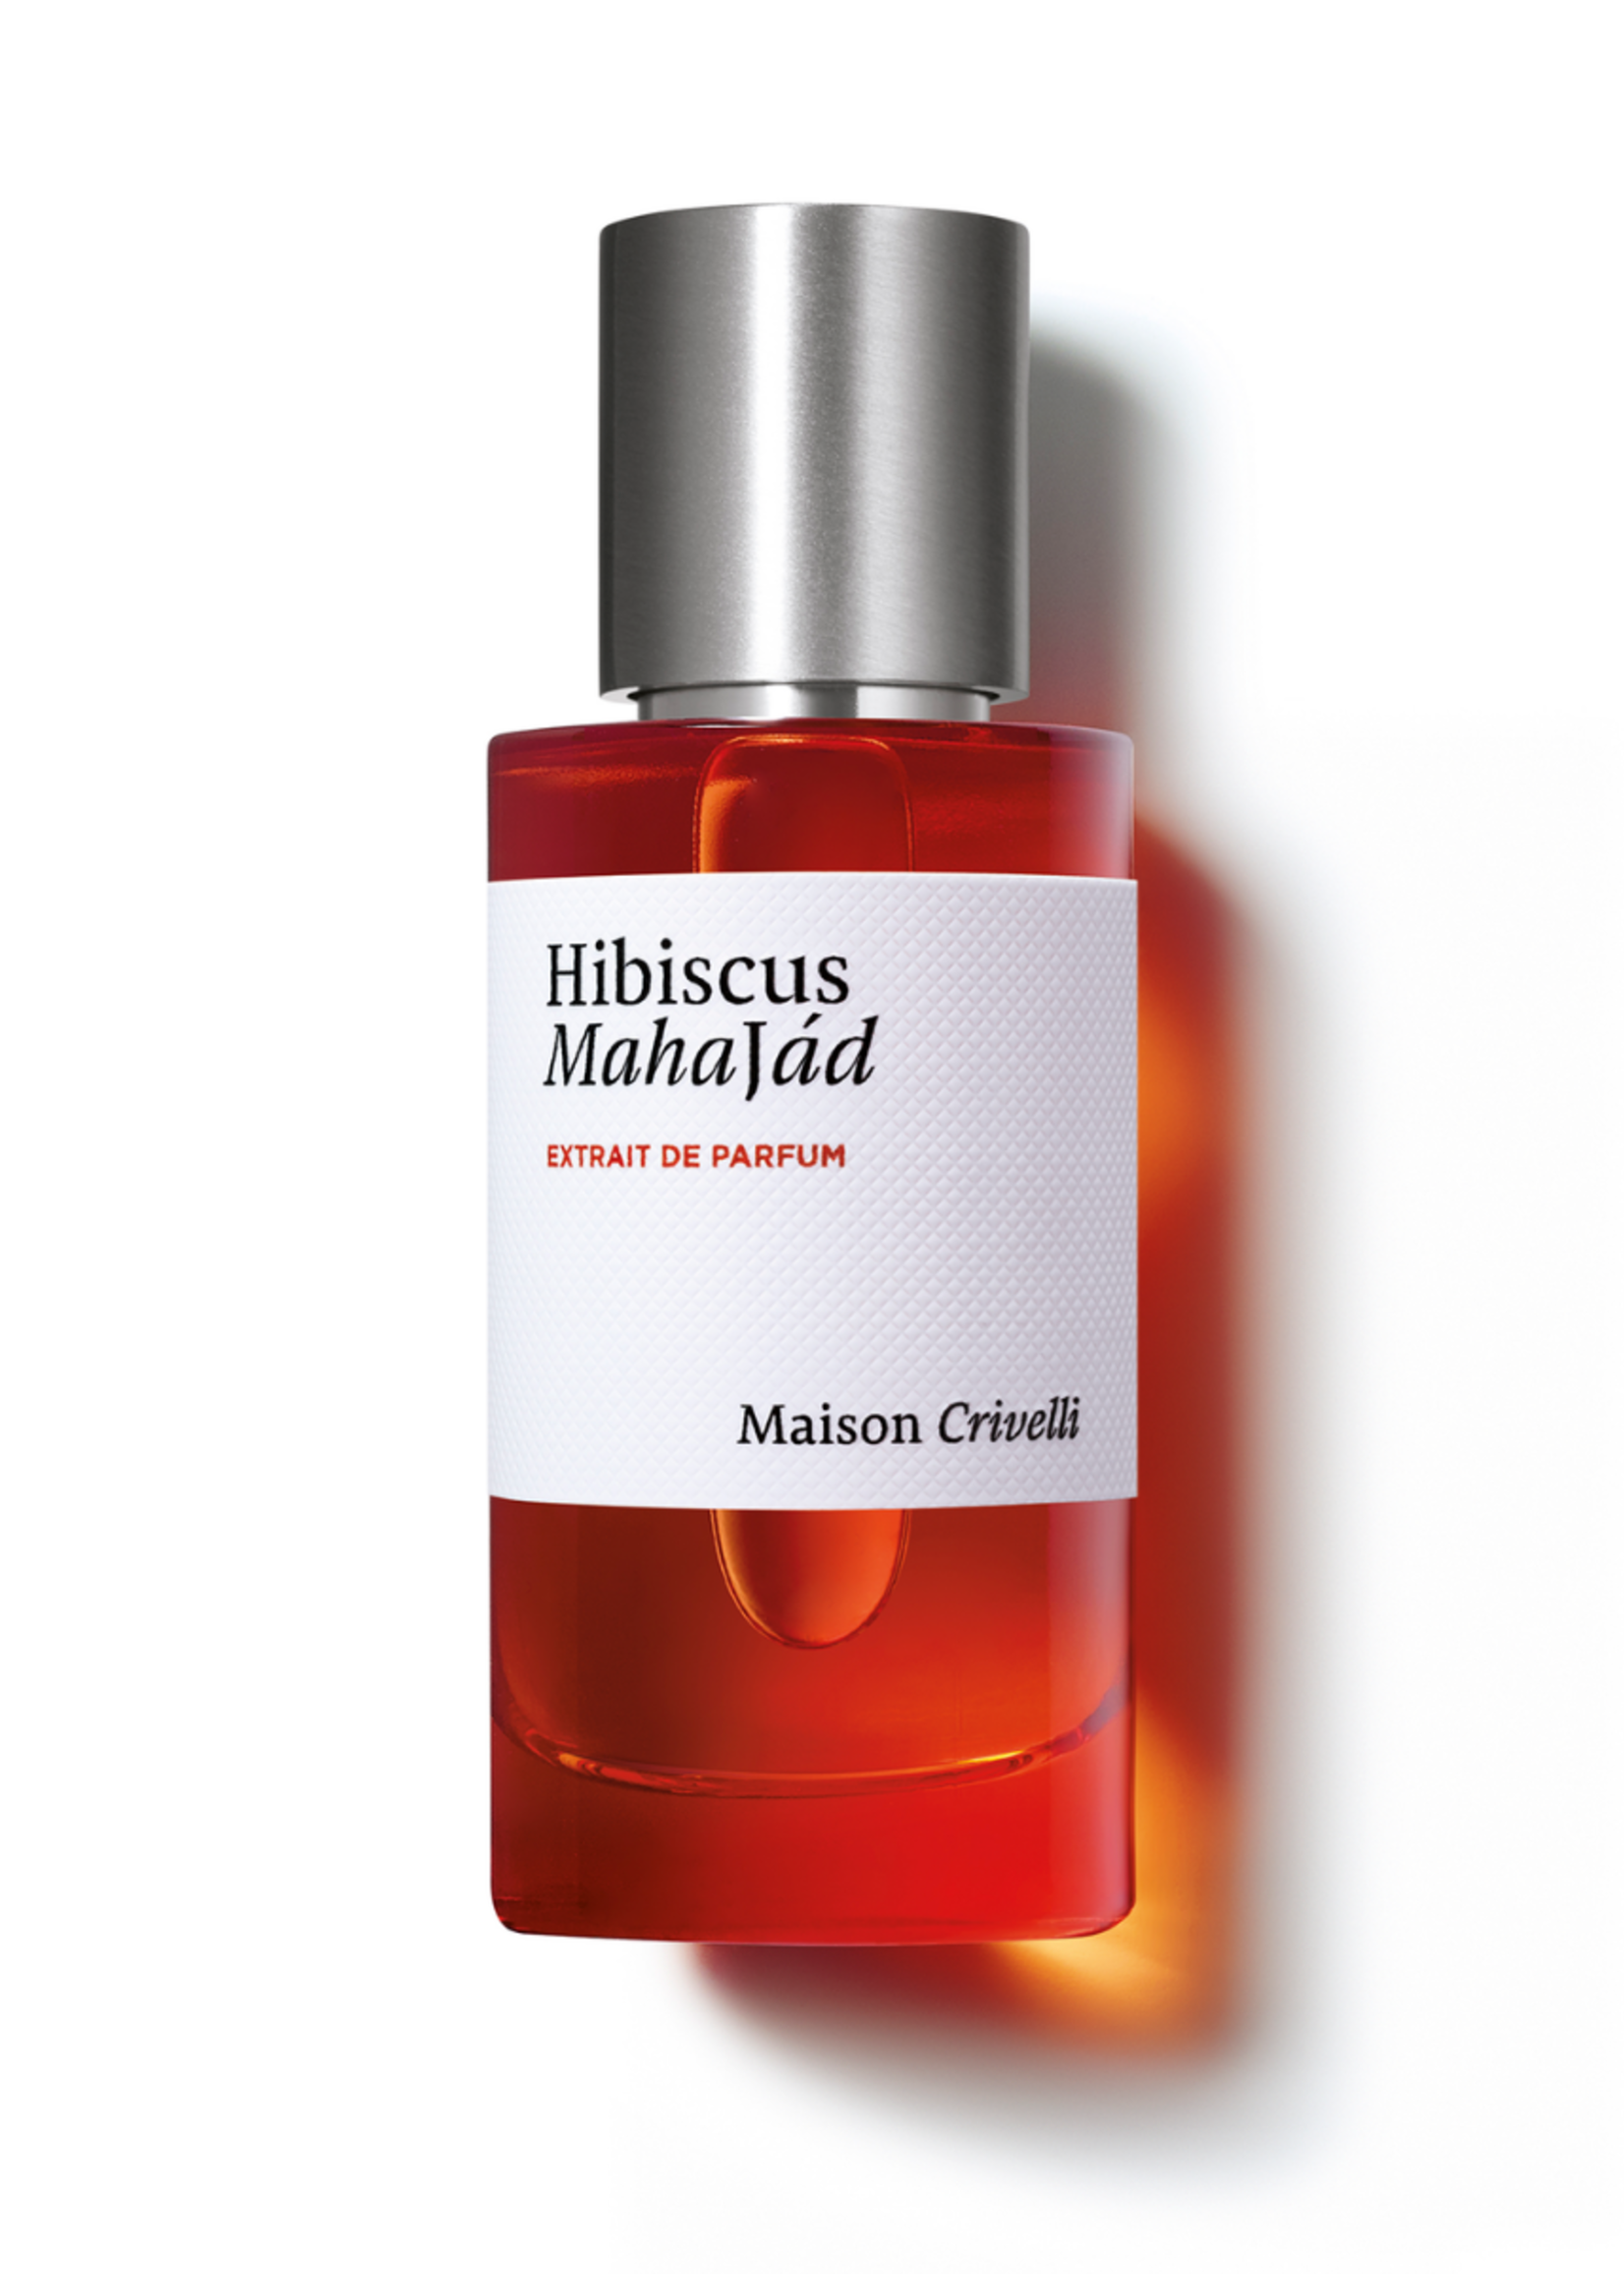 Maison Crivelli Maison Crivelli Hibiscus Mahajád Perfume Extract